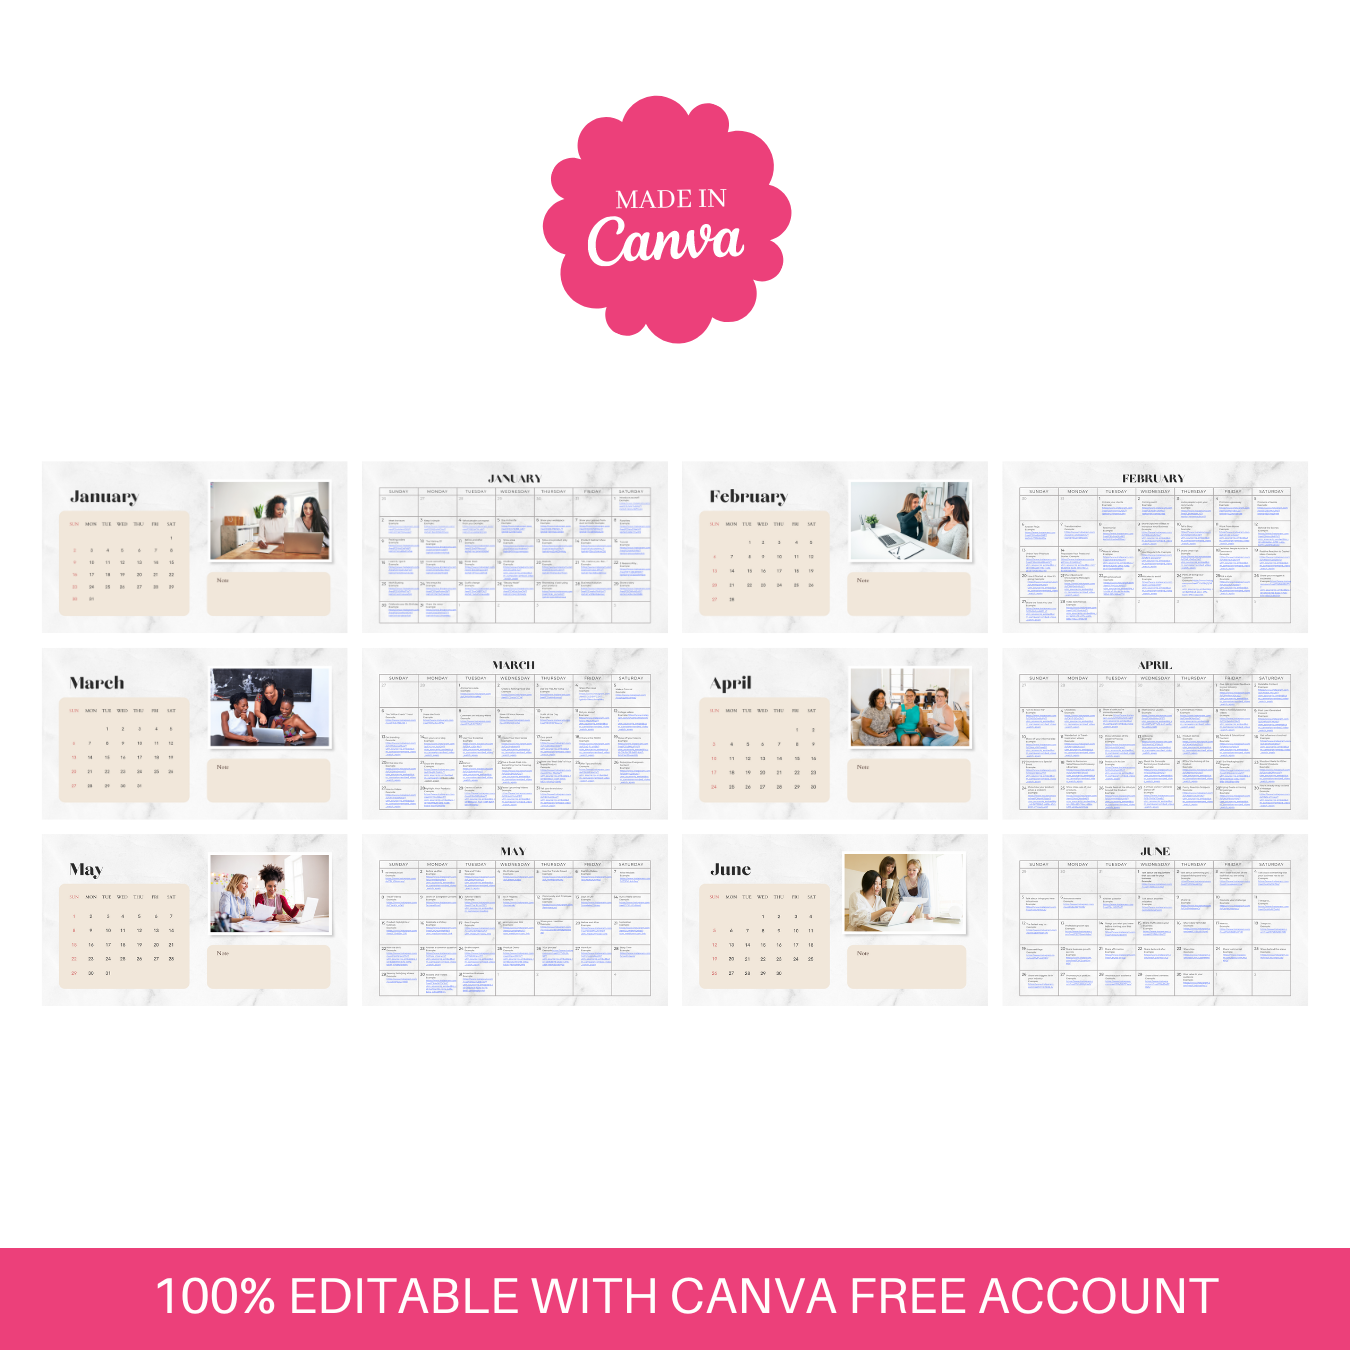 365 Reels Video Content Ideas, Content Calendar, Instagram Posts & Stories, Social Media Planner